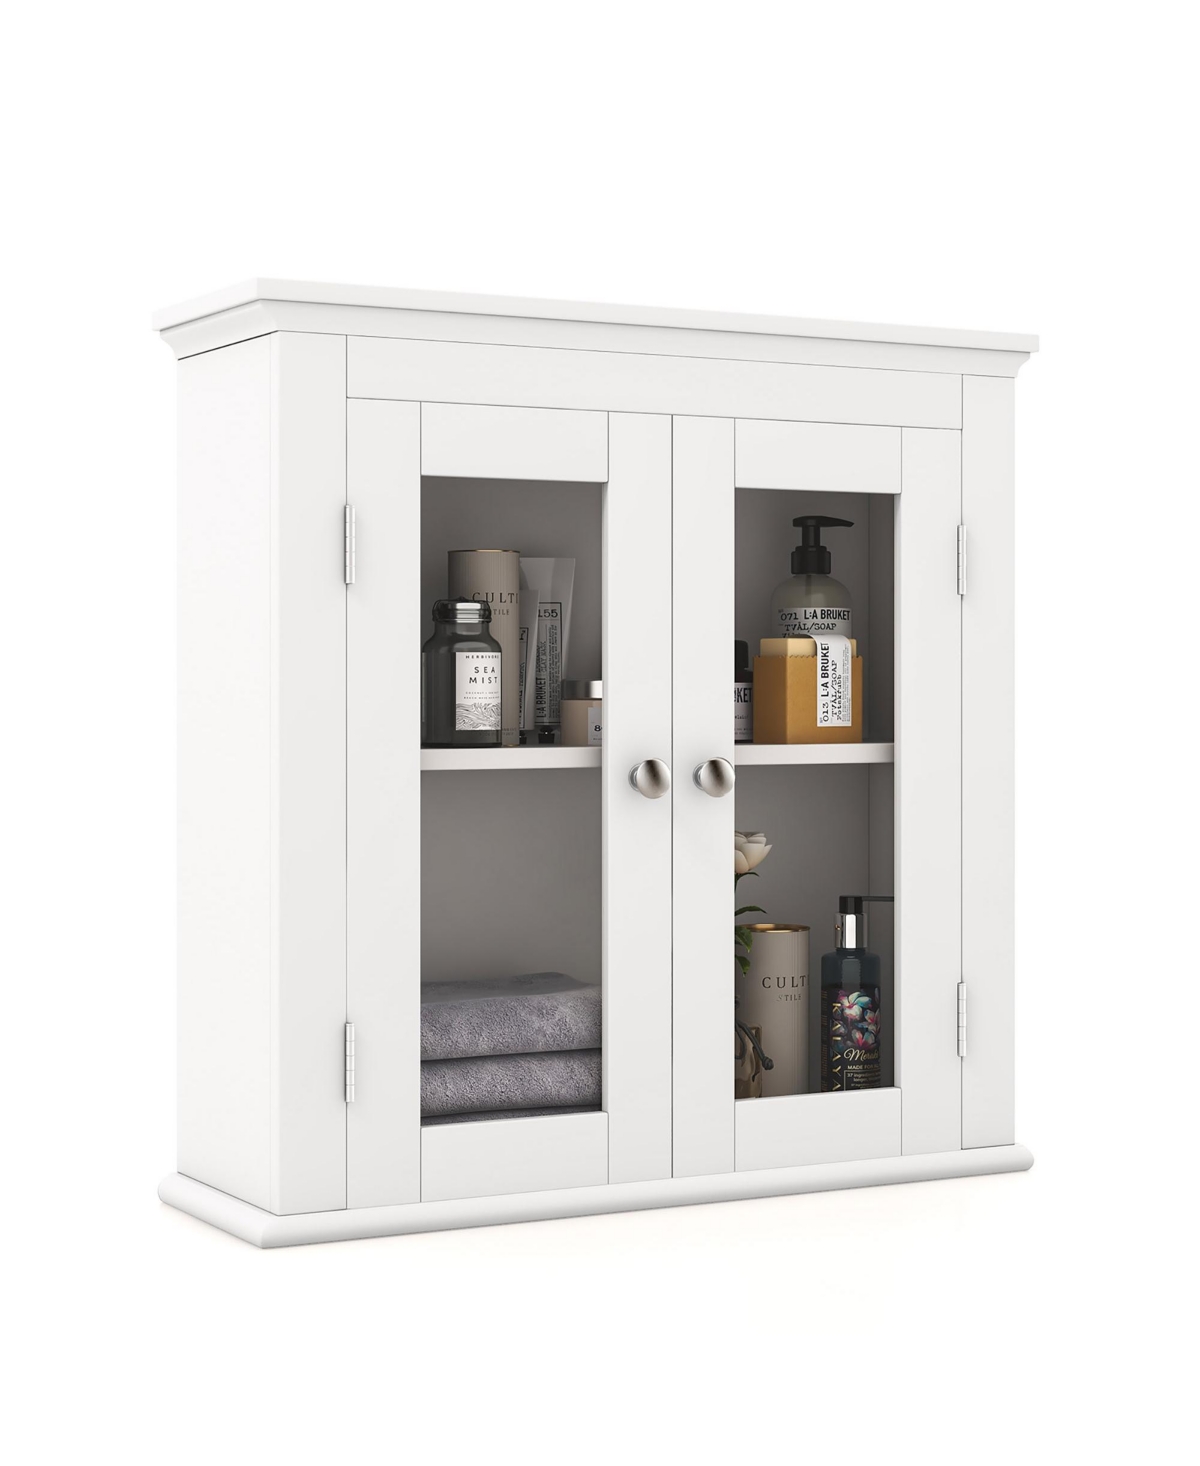 2-Door Bathroom Wall Mount Medicine Cabinet with Tempered Glass & Adjustable Shelf - White